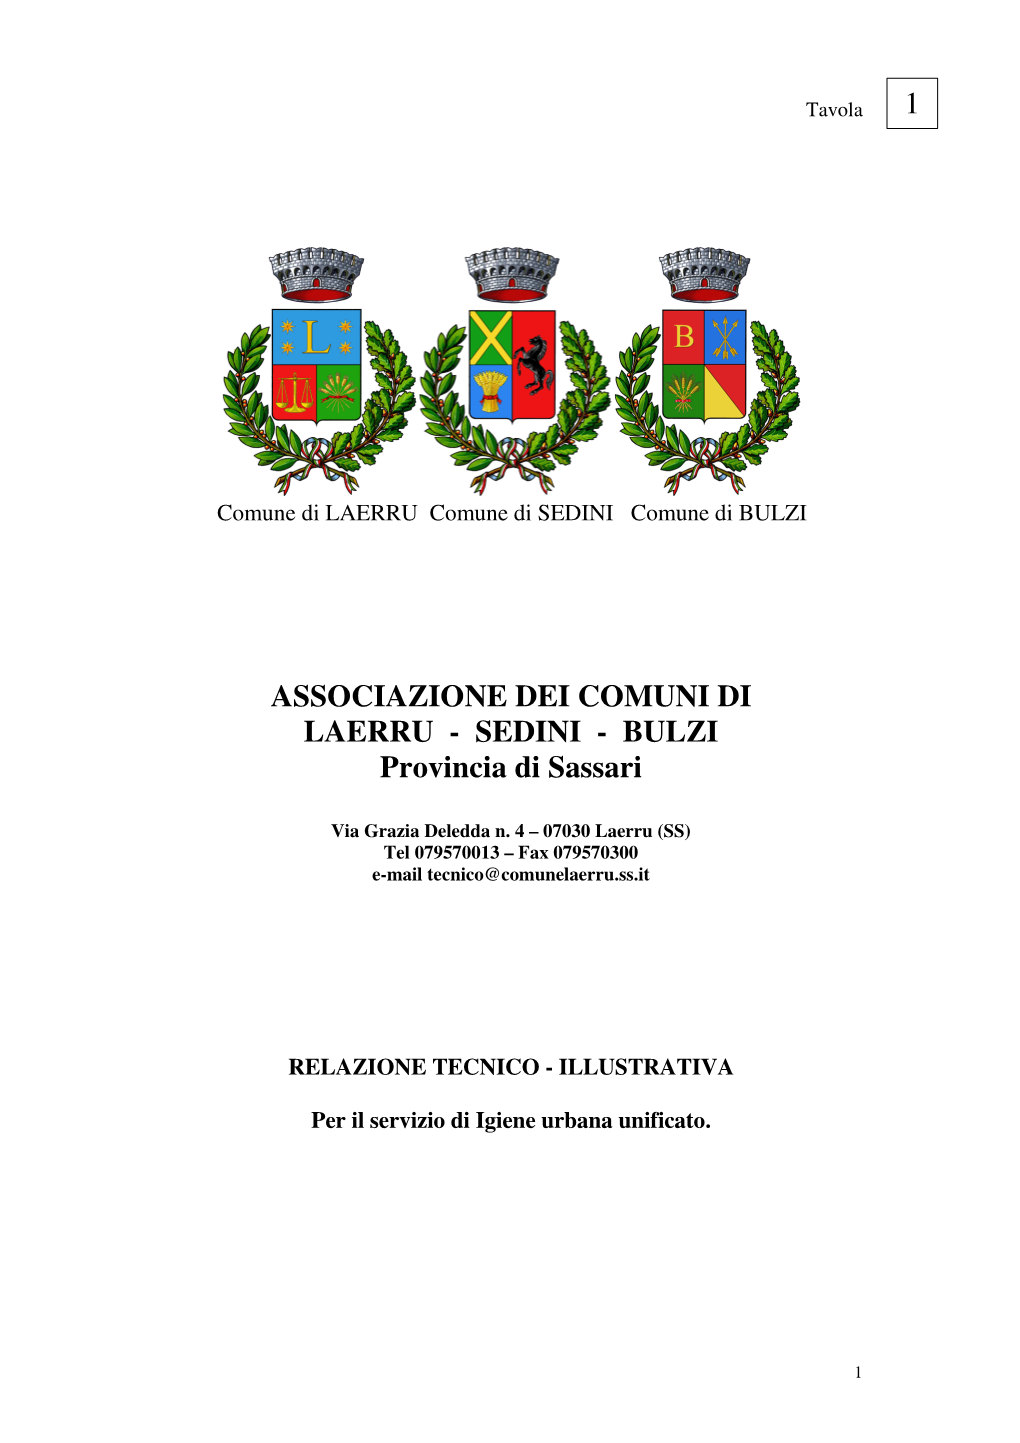 ASSOCIAZIONE DEI COMUNI DI LAERRU - SEDINI - BULZI Provincia Di Sassari